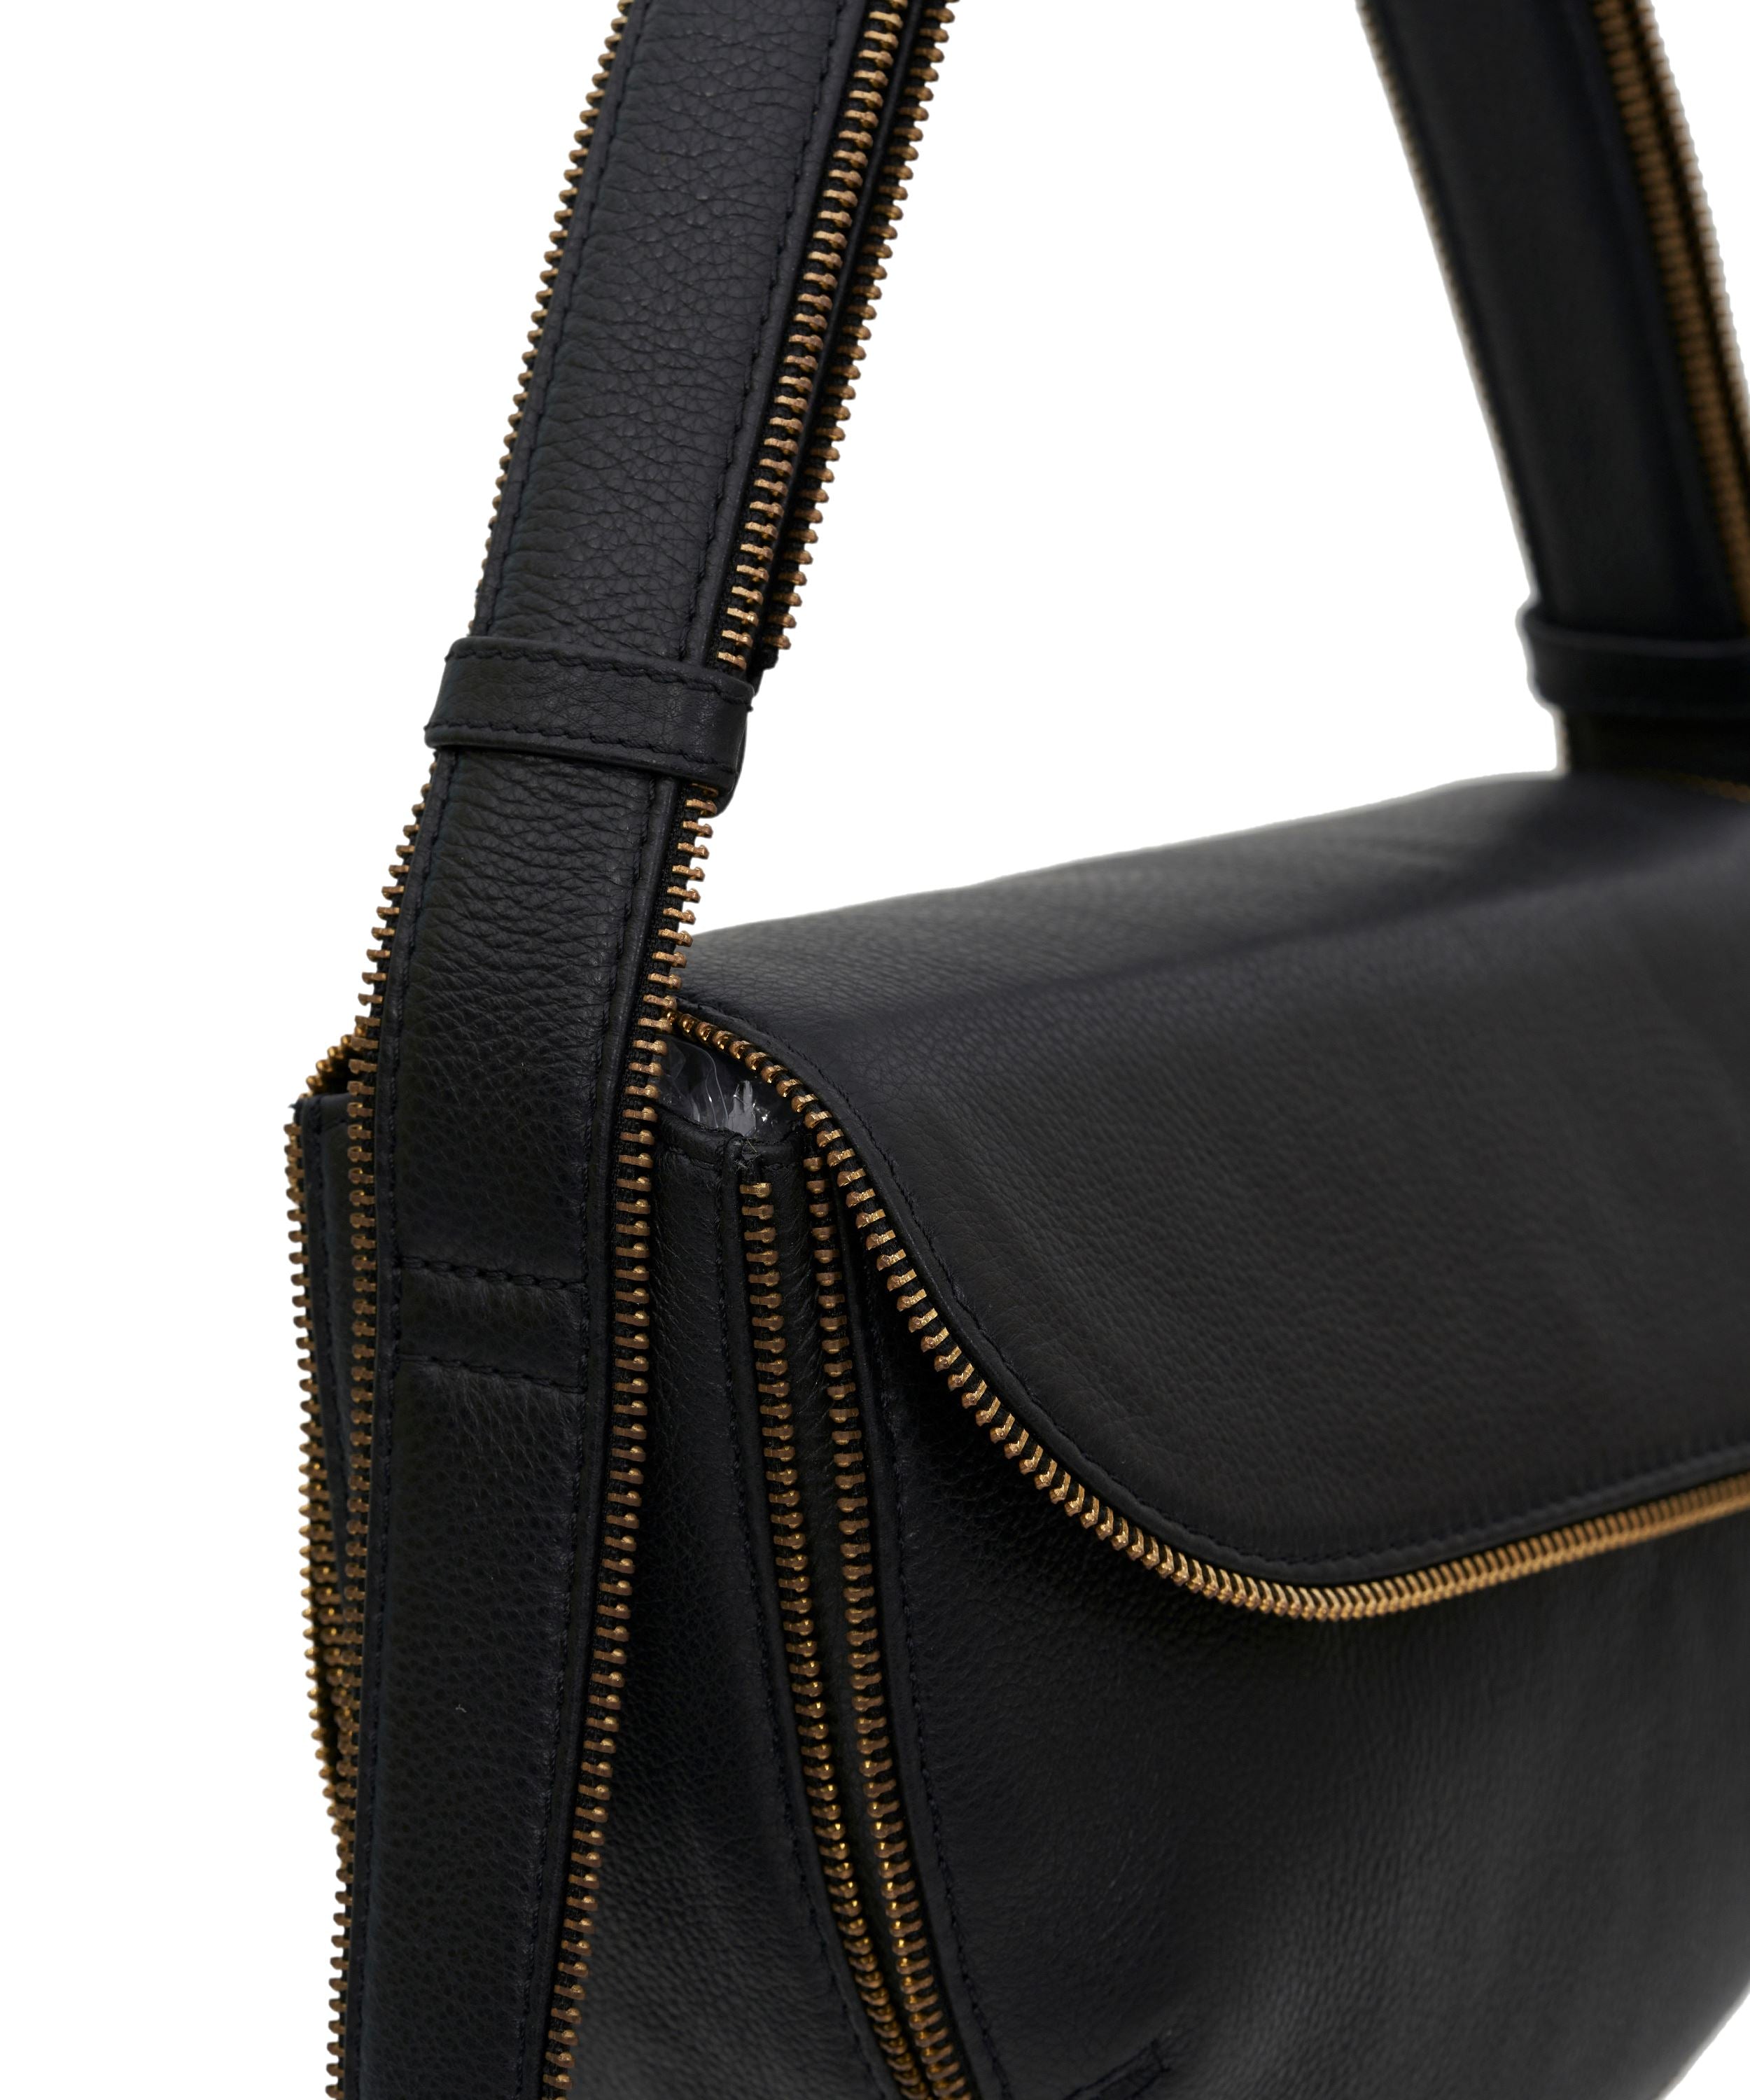 Billie Bag with Zipper Details